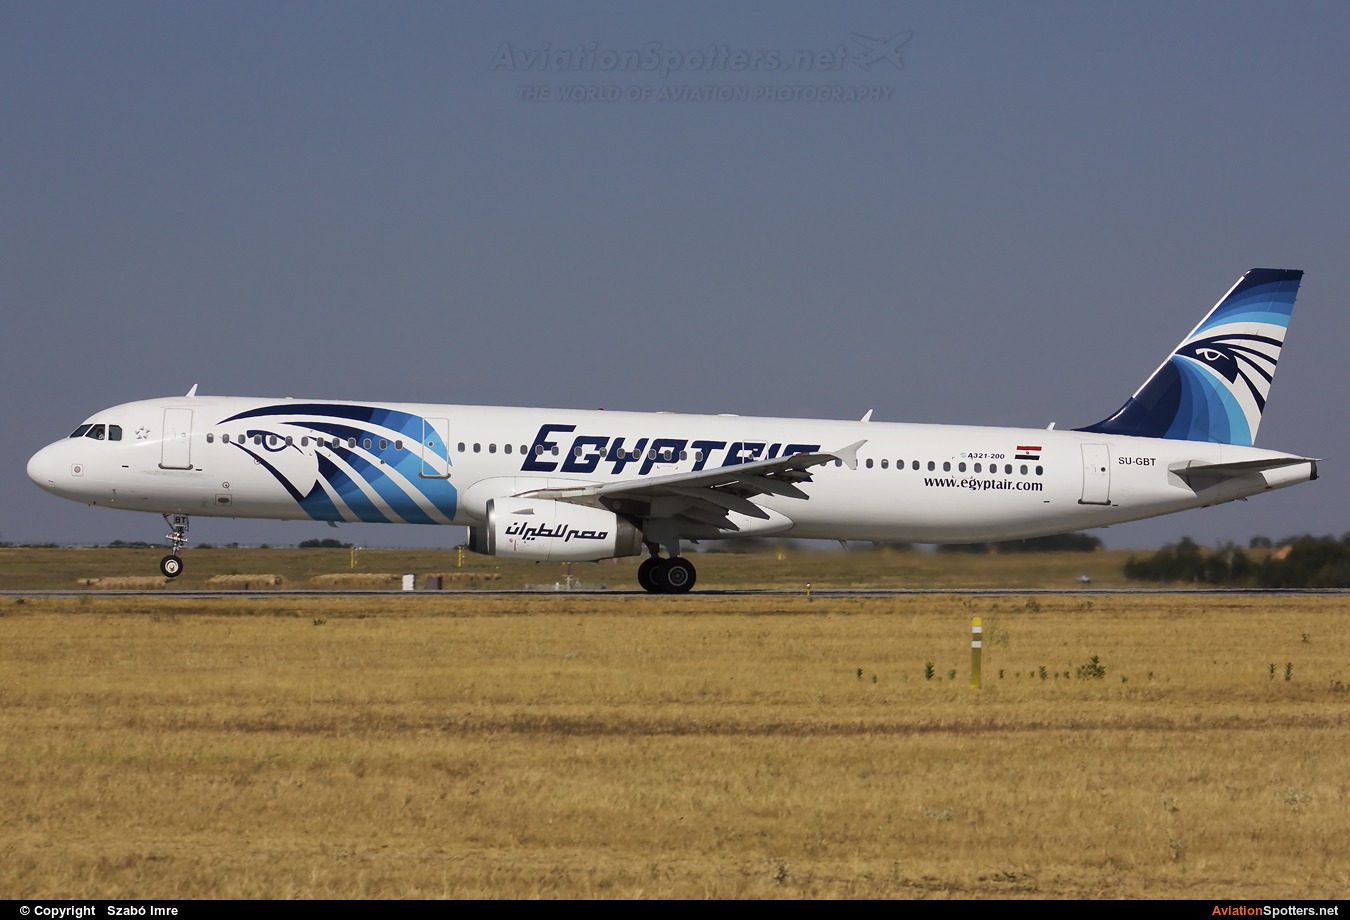 Egyptair  -  A321  (SU-GBT) By Szabó Imre (SzImre71)